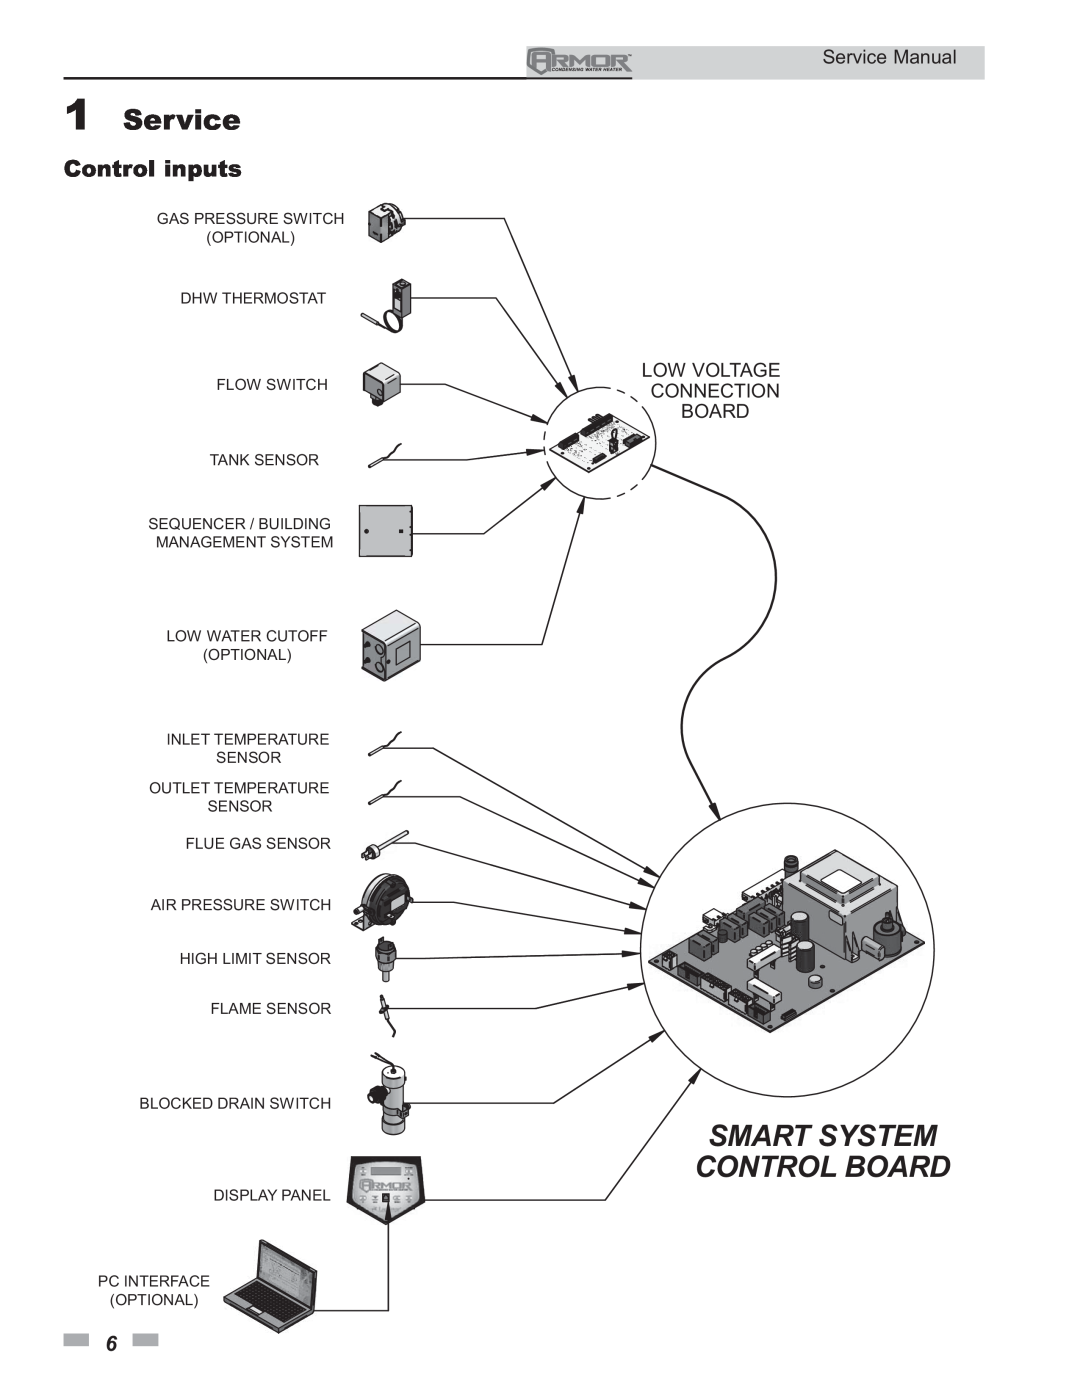 Lochinvar 150 - 800 service manual Smart System Control Board, Control inputs, 1Service 